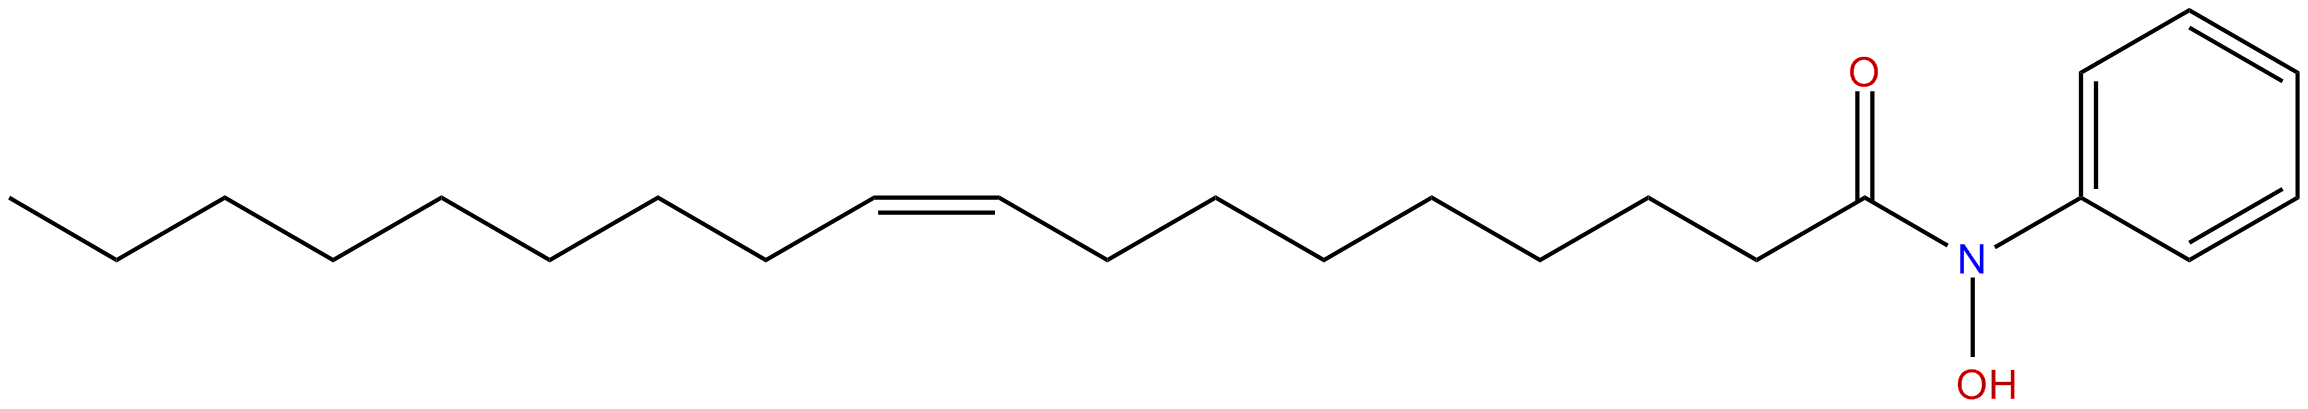 Image of N-phenyloleohydroxamic acid